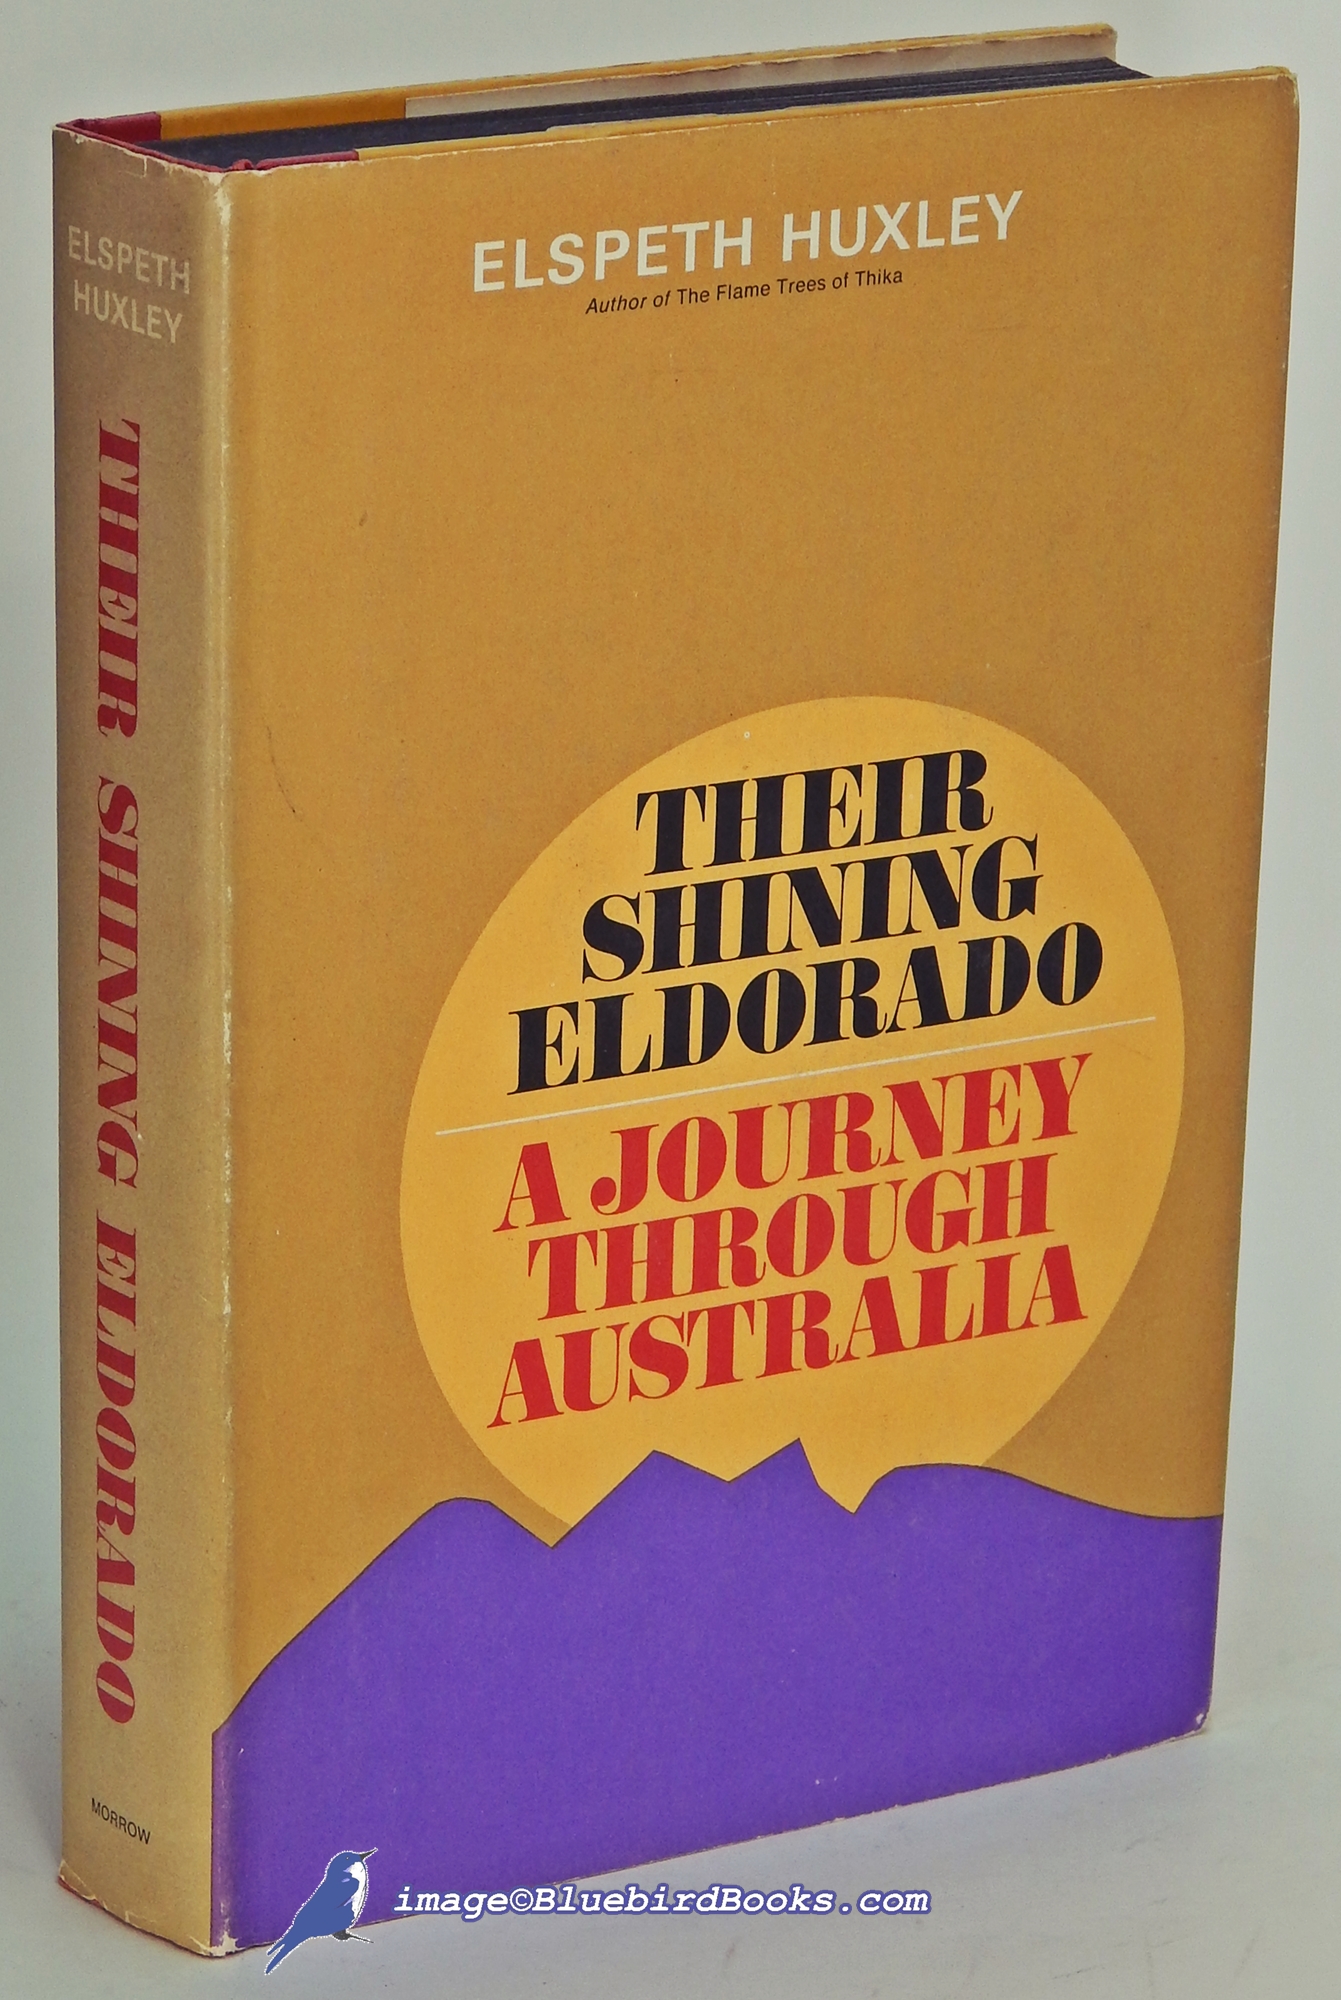 HUXLEY, ELSPETH - Their Shining Eldorado: A Journey Through Australia